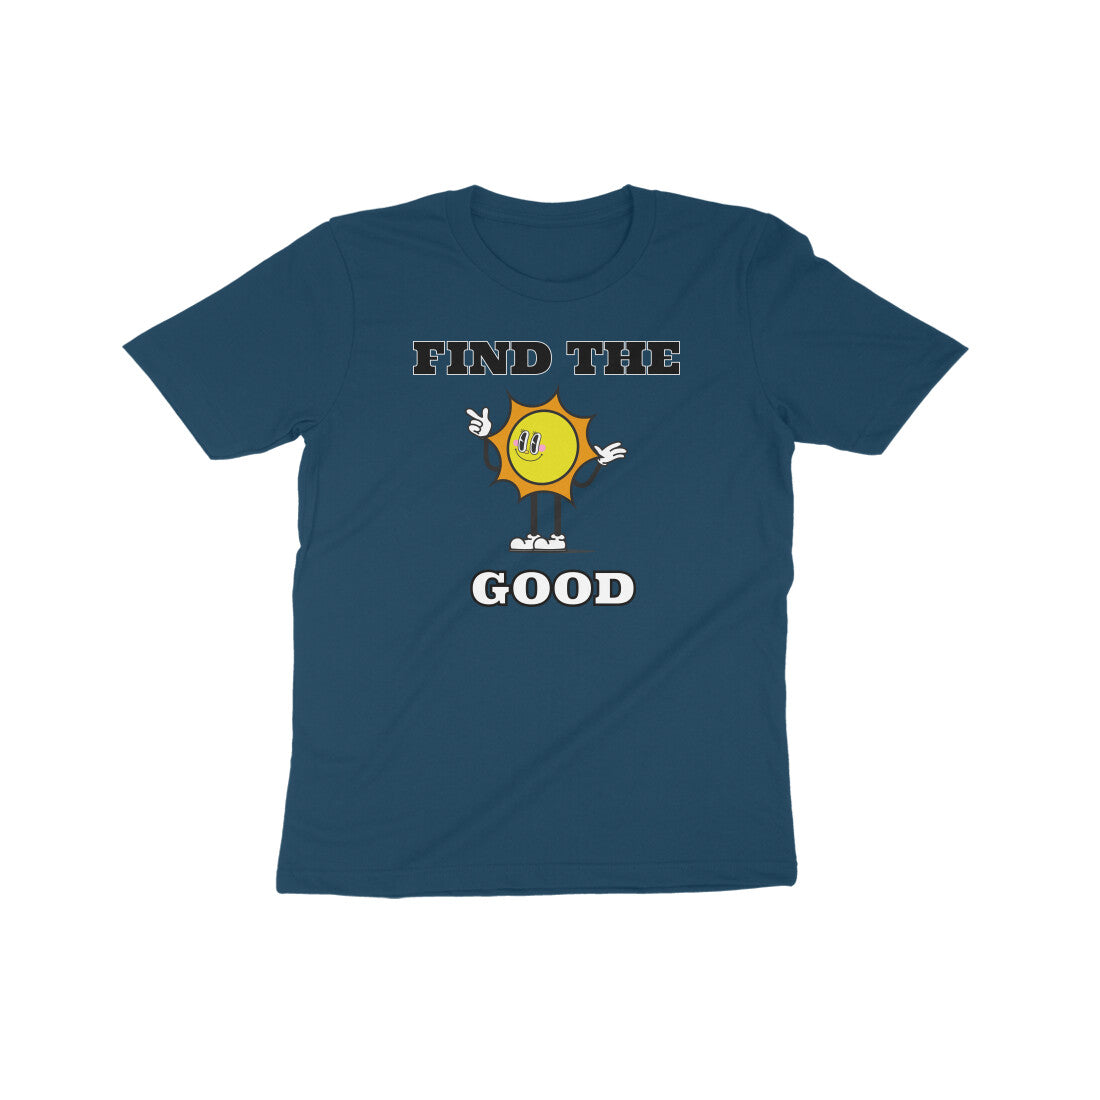 Find the good Kids T-Shirt